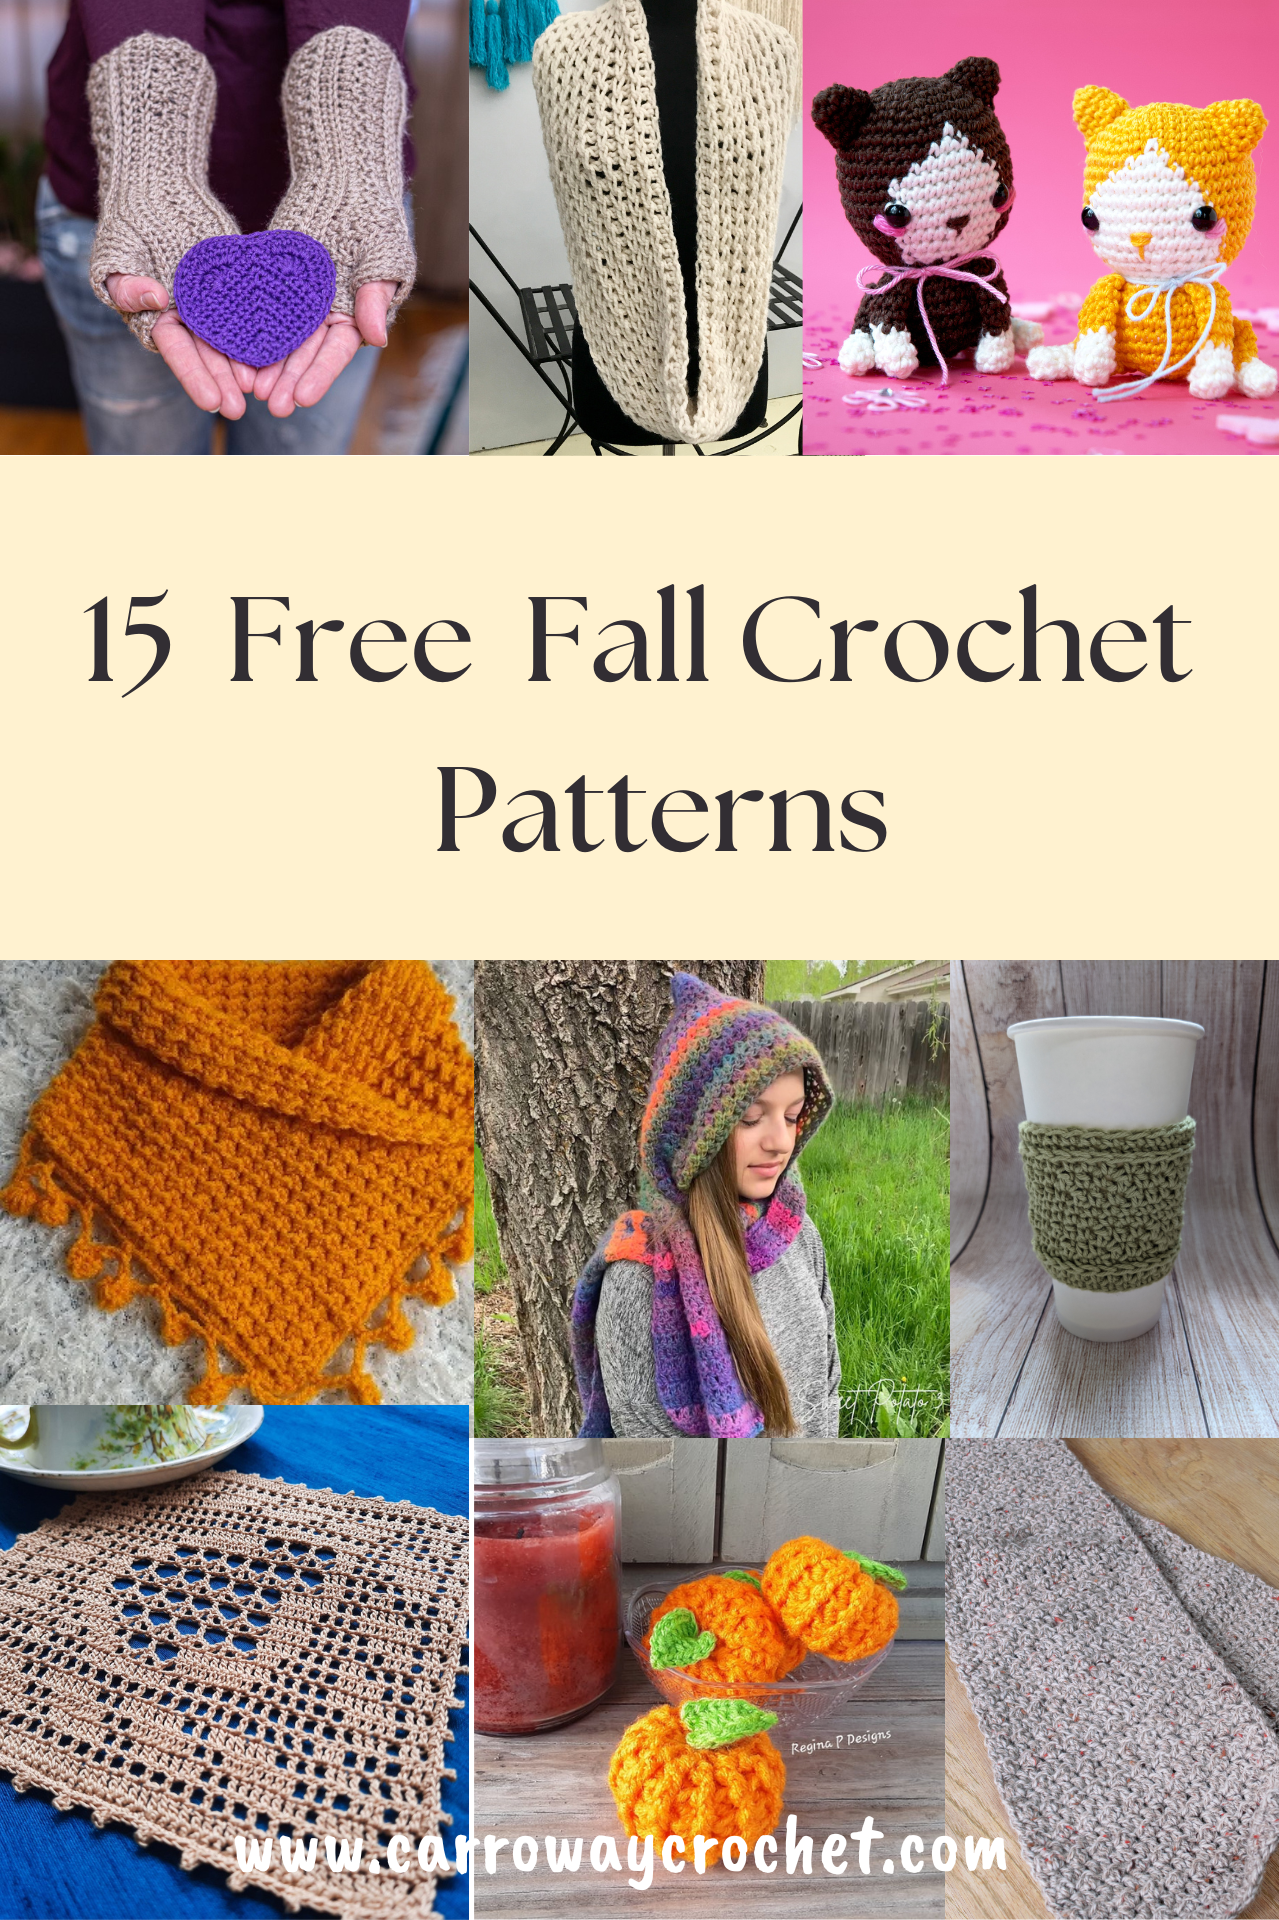 Basic Granny Square Crochet Patterns - Fosbas Designs